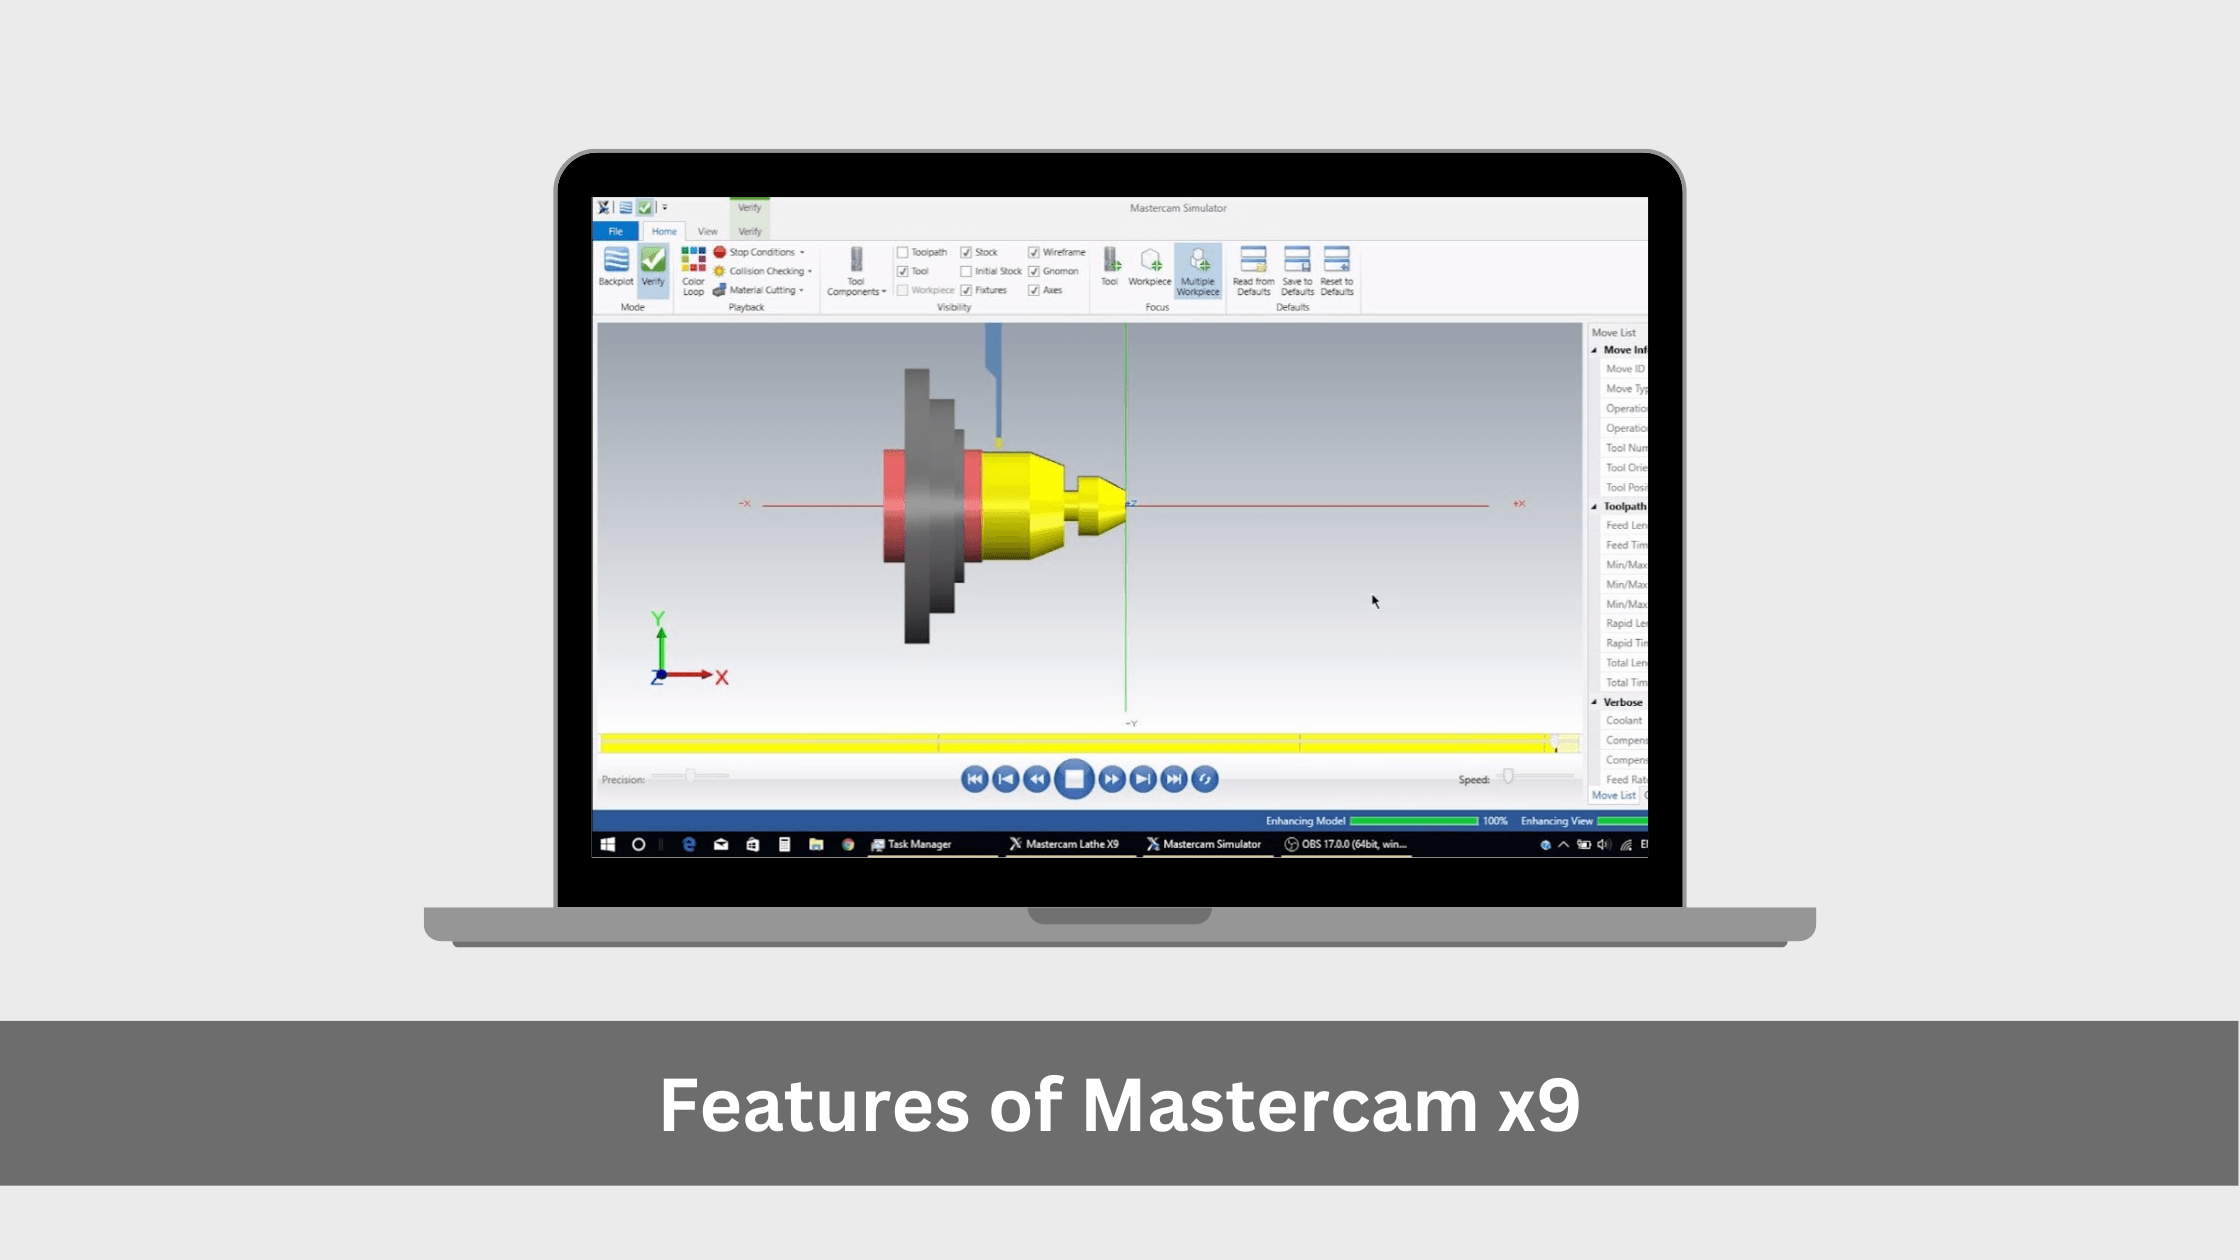 Features of Mastercam x9